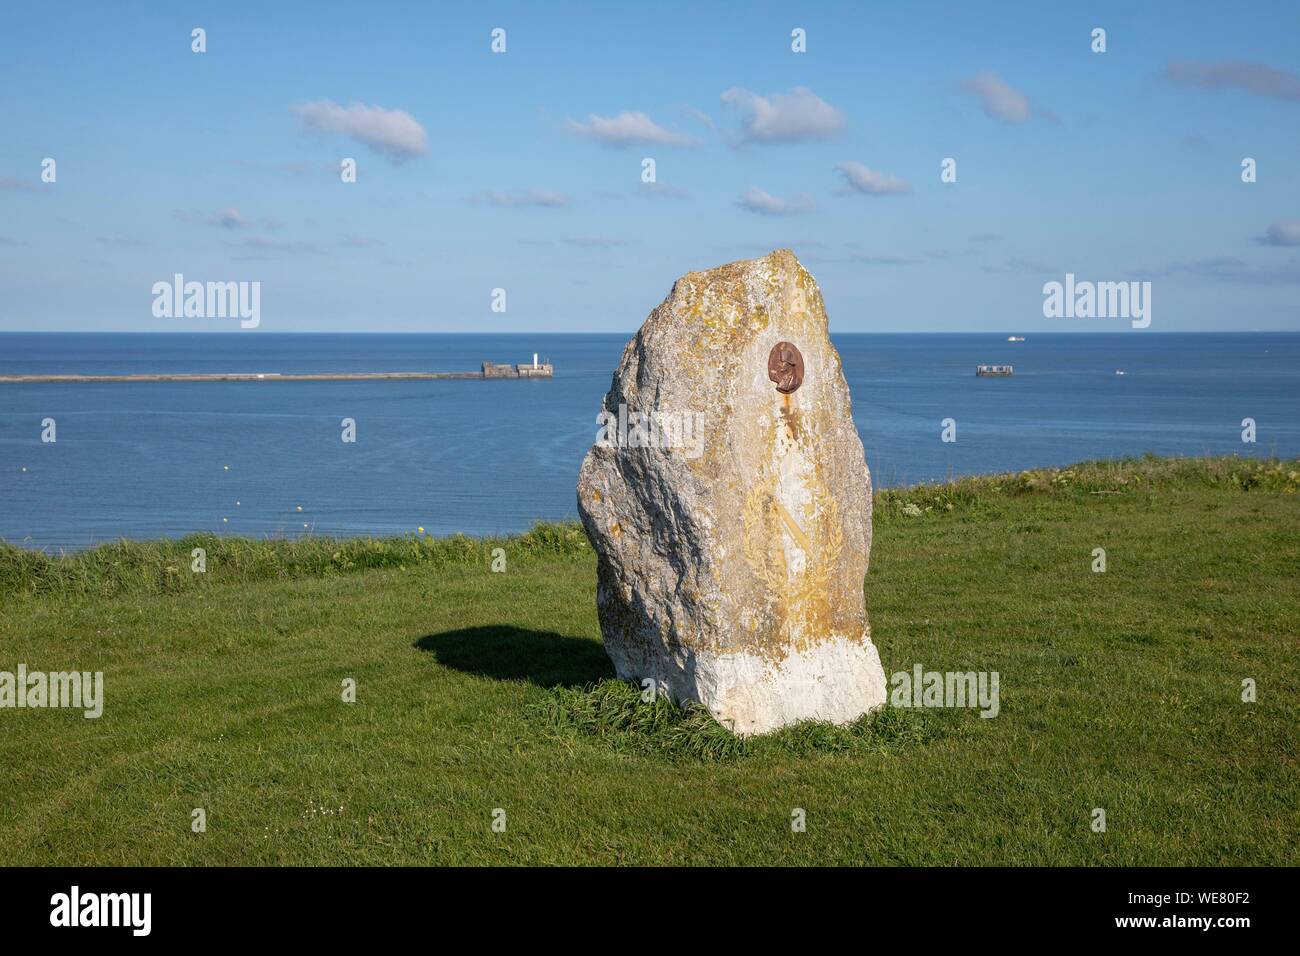 France, Pas de Calais, Boulogne sur Mer, camp de boulogne, stone with the image of Napoleon Stock Photo